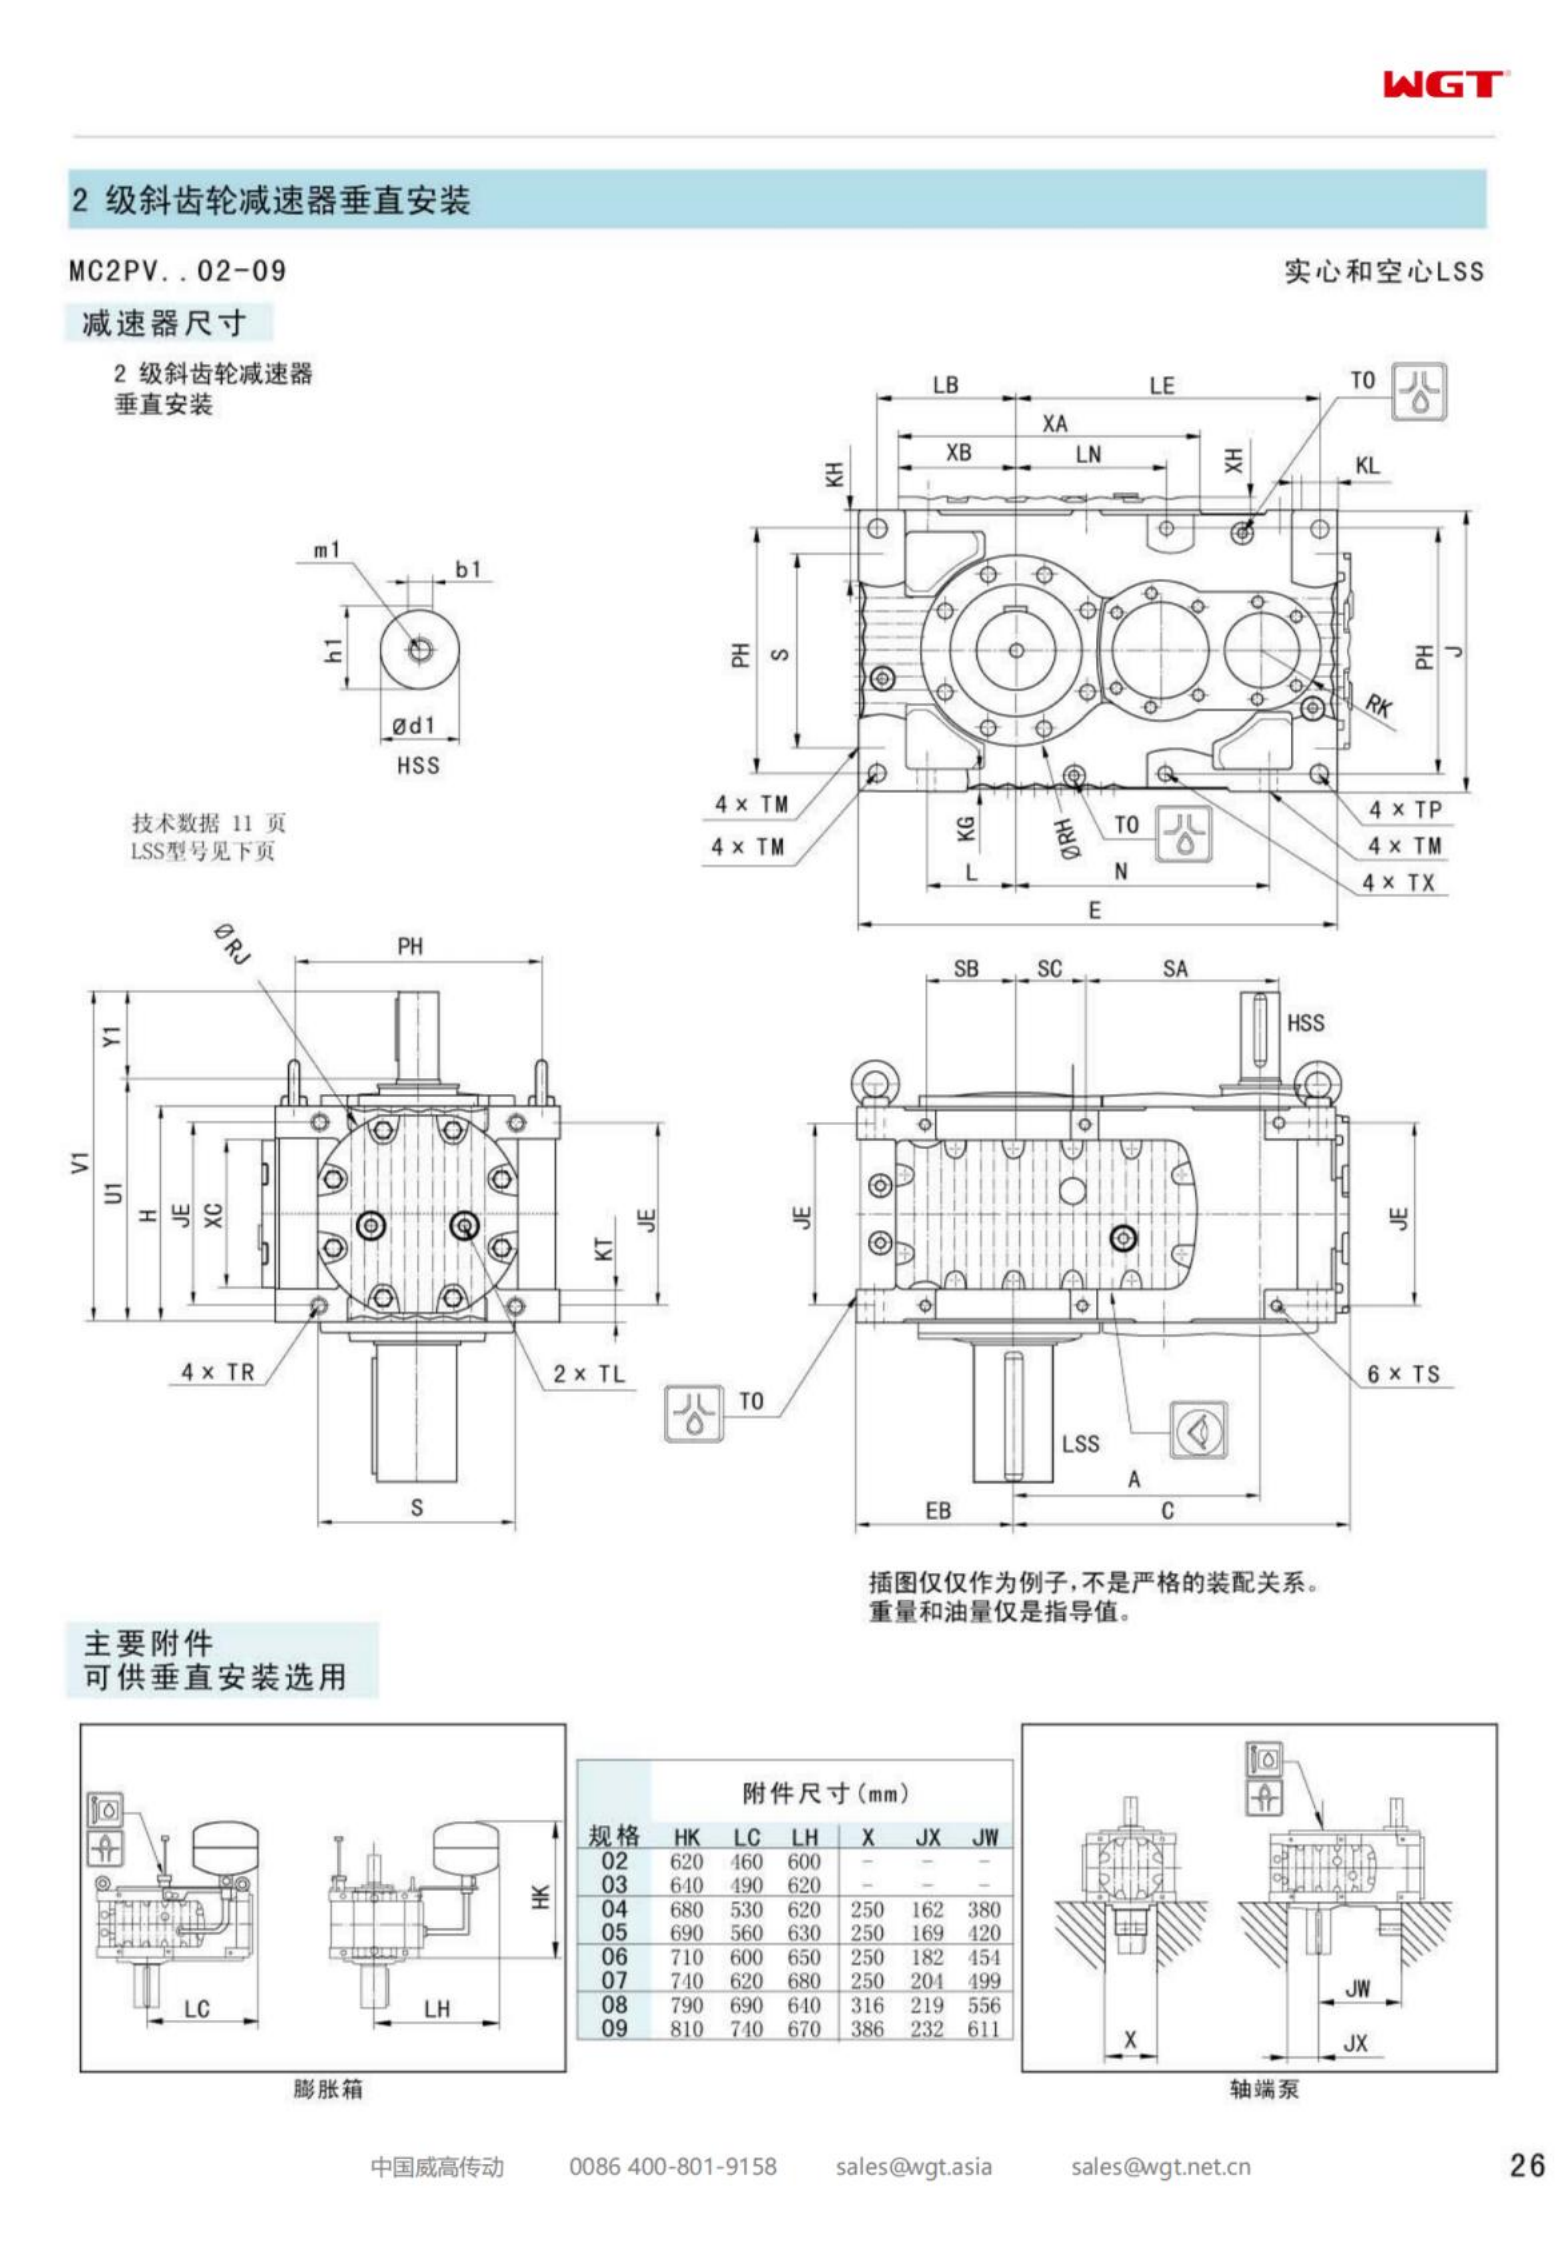 MC2PVHF04 replaces _SEW_MC_Series gearbox (patent)